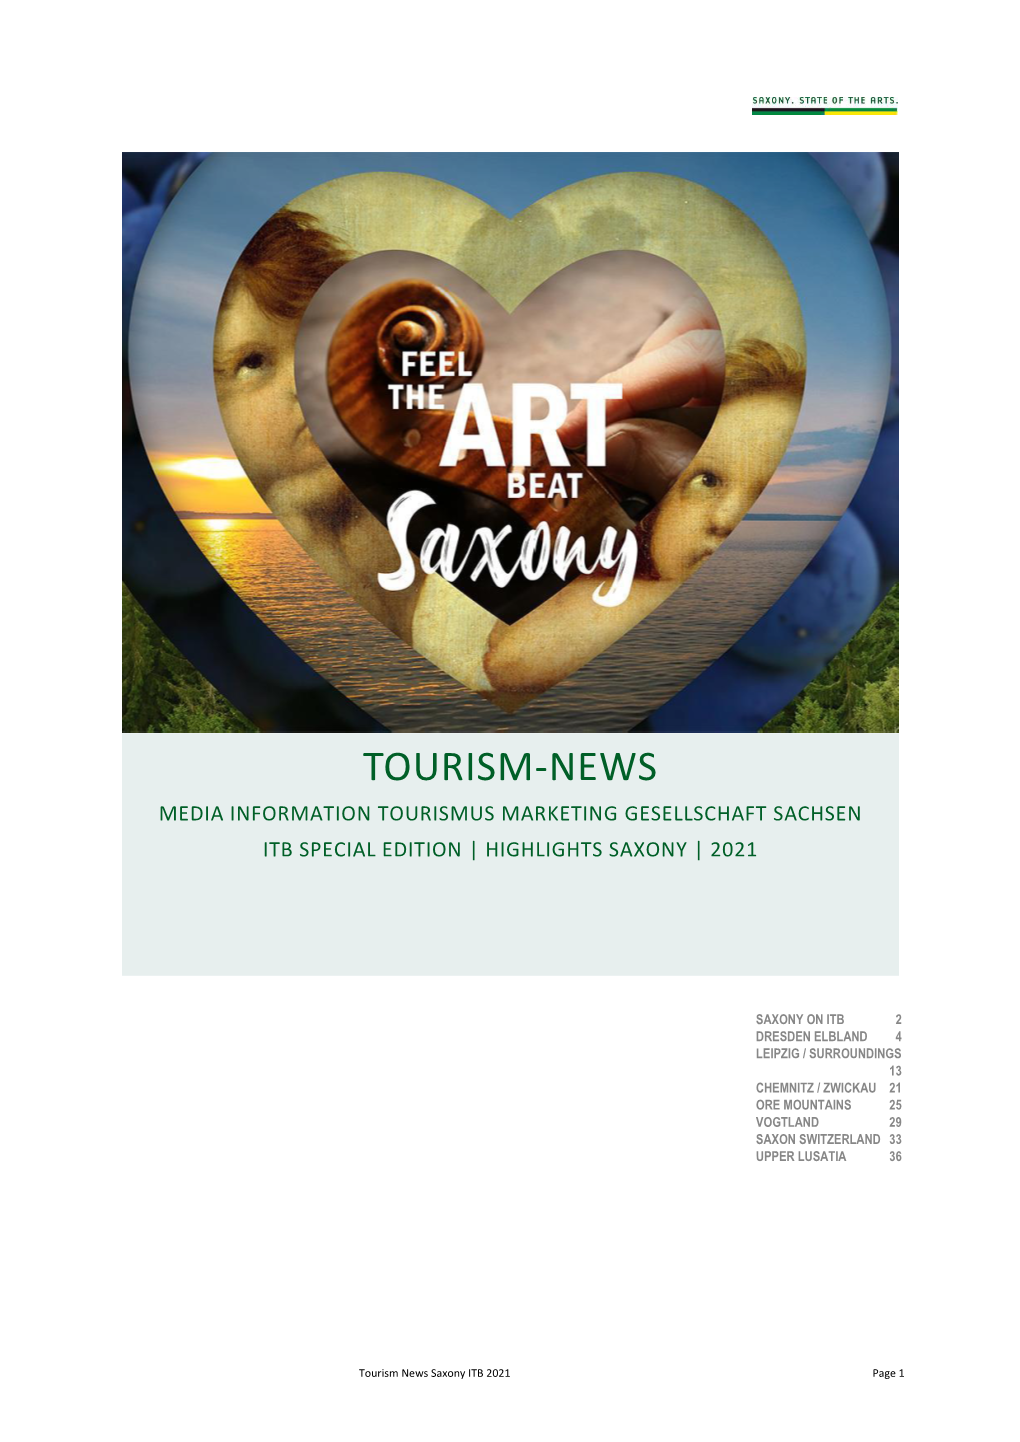 Tourism-News Media Information Tourismus Marketing Gesellschaft Sachsen Itb Special Edition | Highlights Saxony | 2021